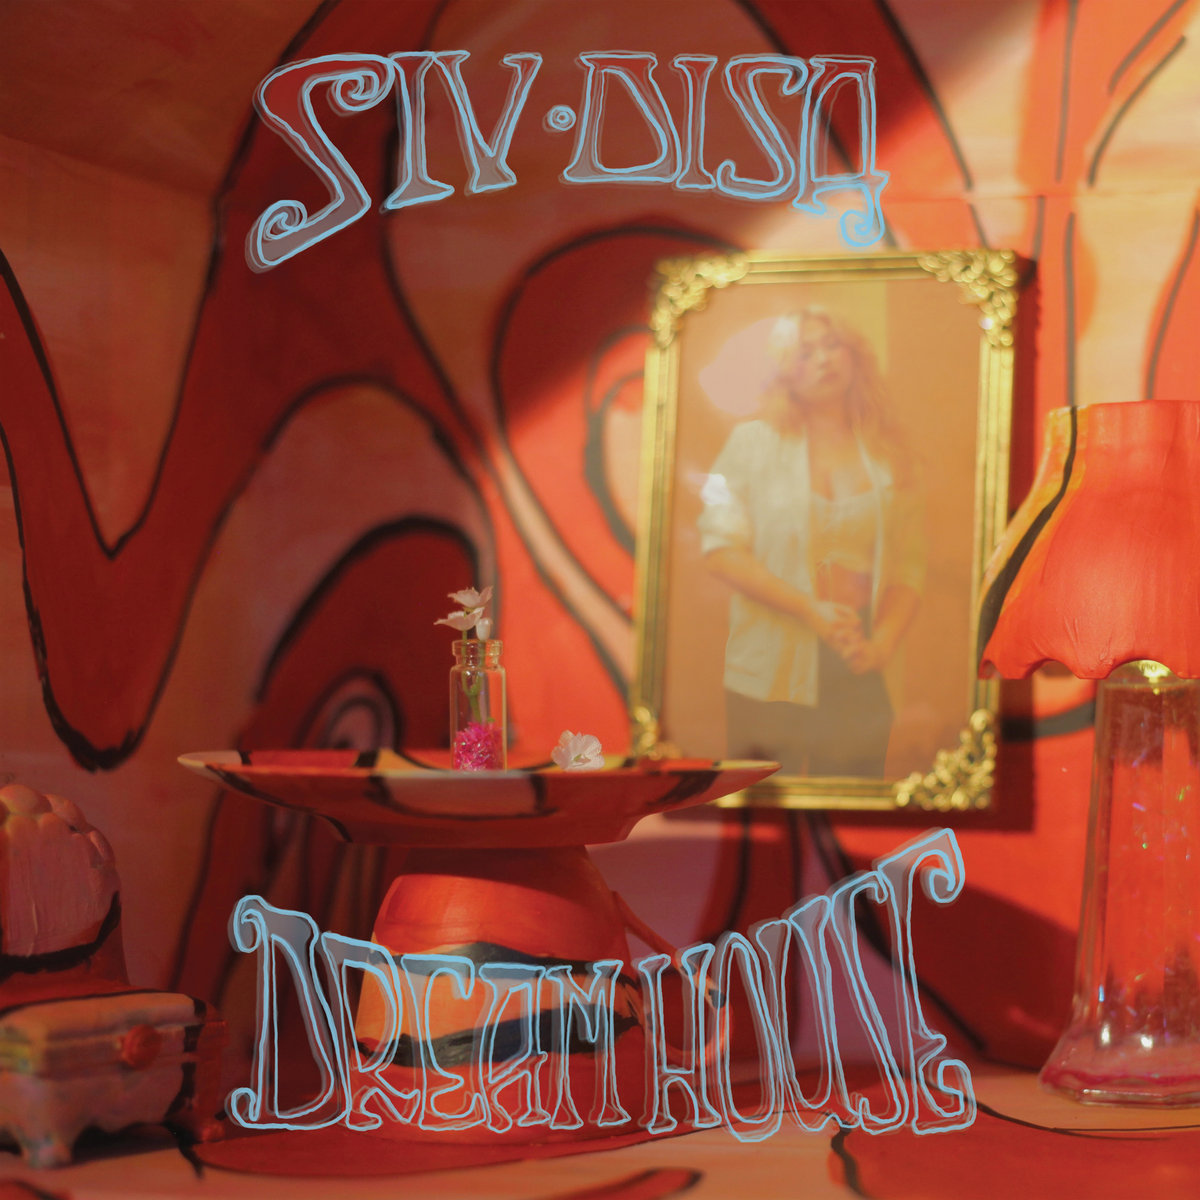 Siv Disa Dreamhouse album artwork